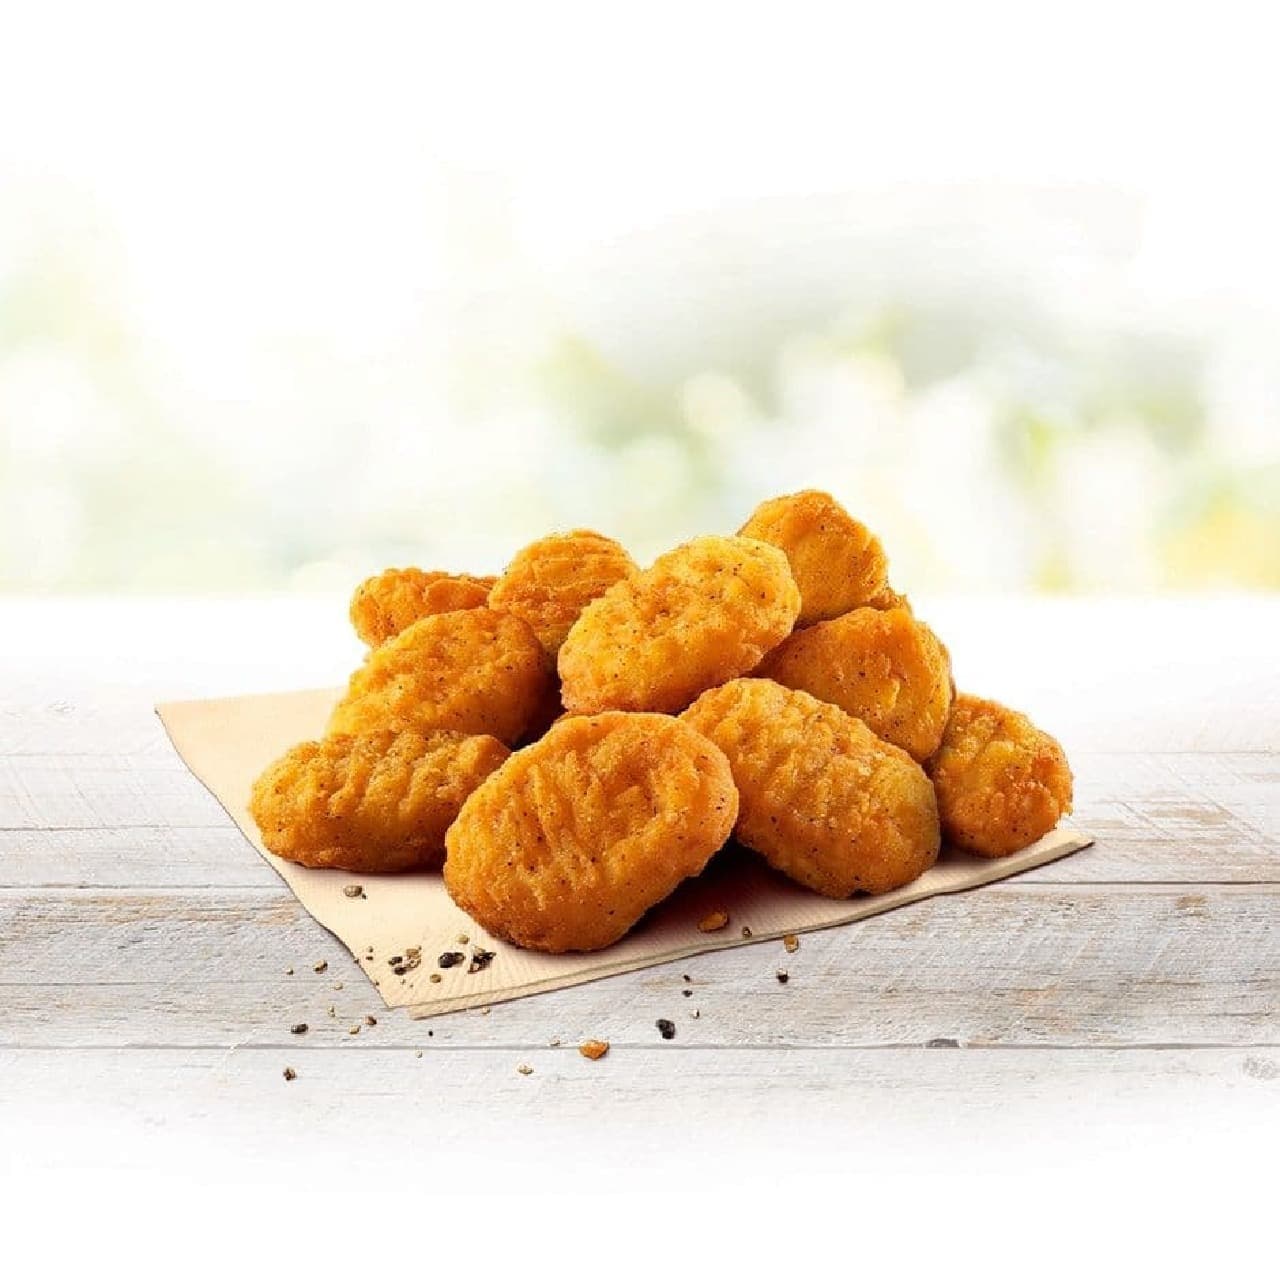 Kentucky Fried Chicken "Nuggets